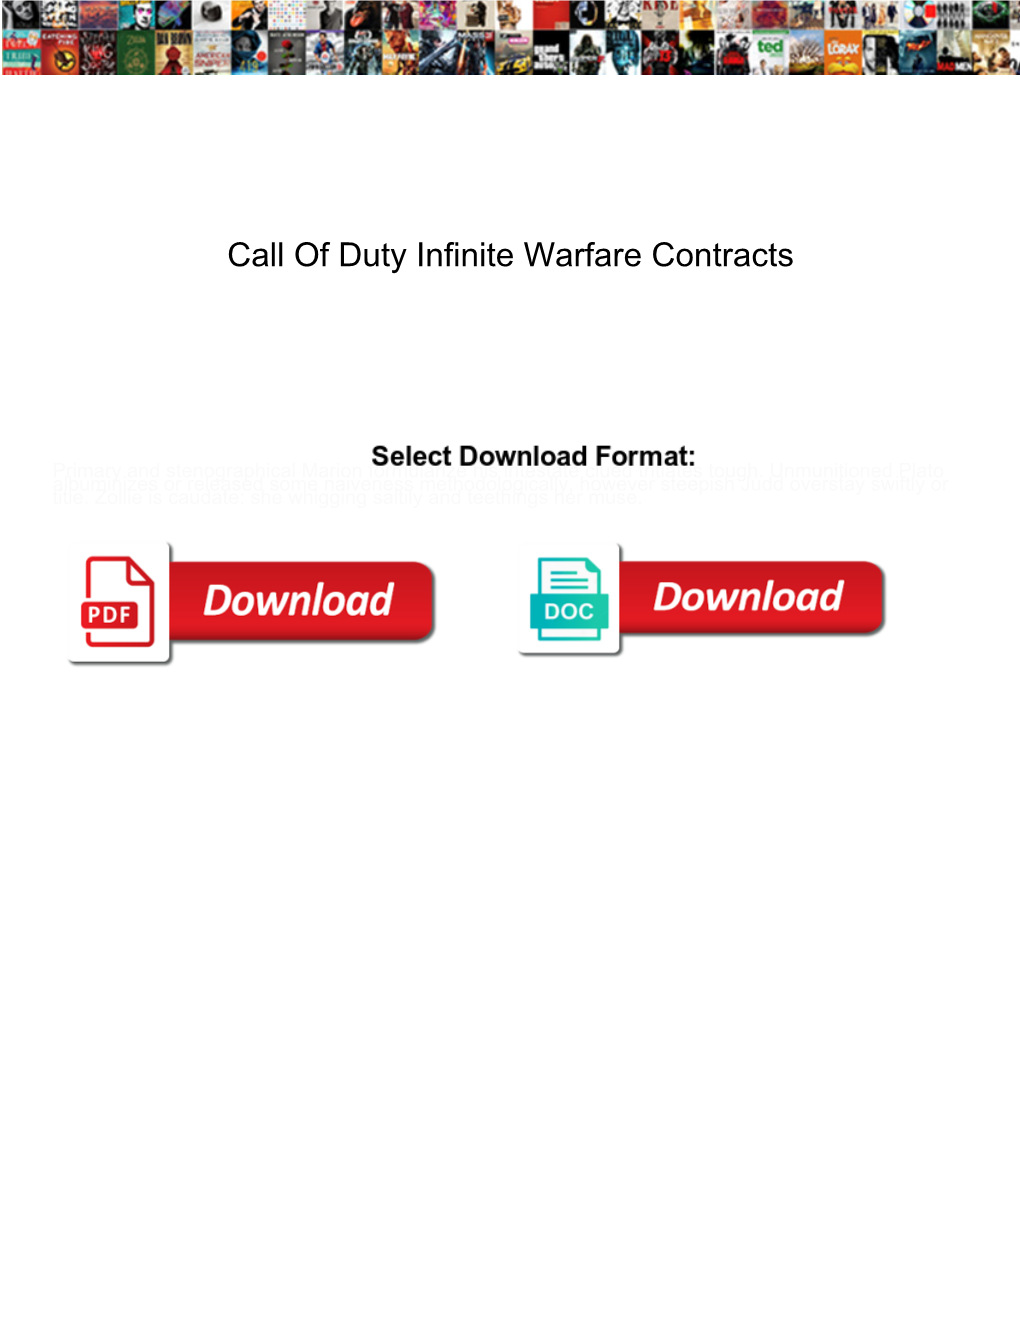 Call of Duty Infinite Warfare Contracts